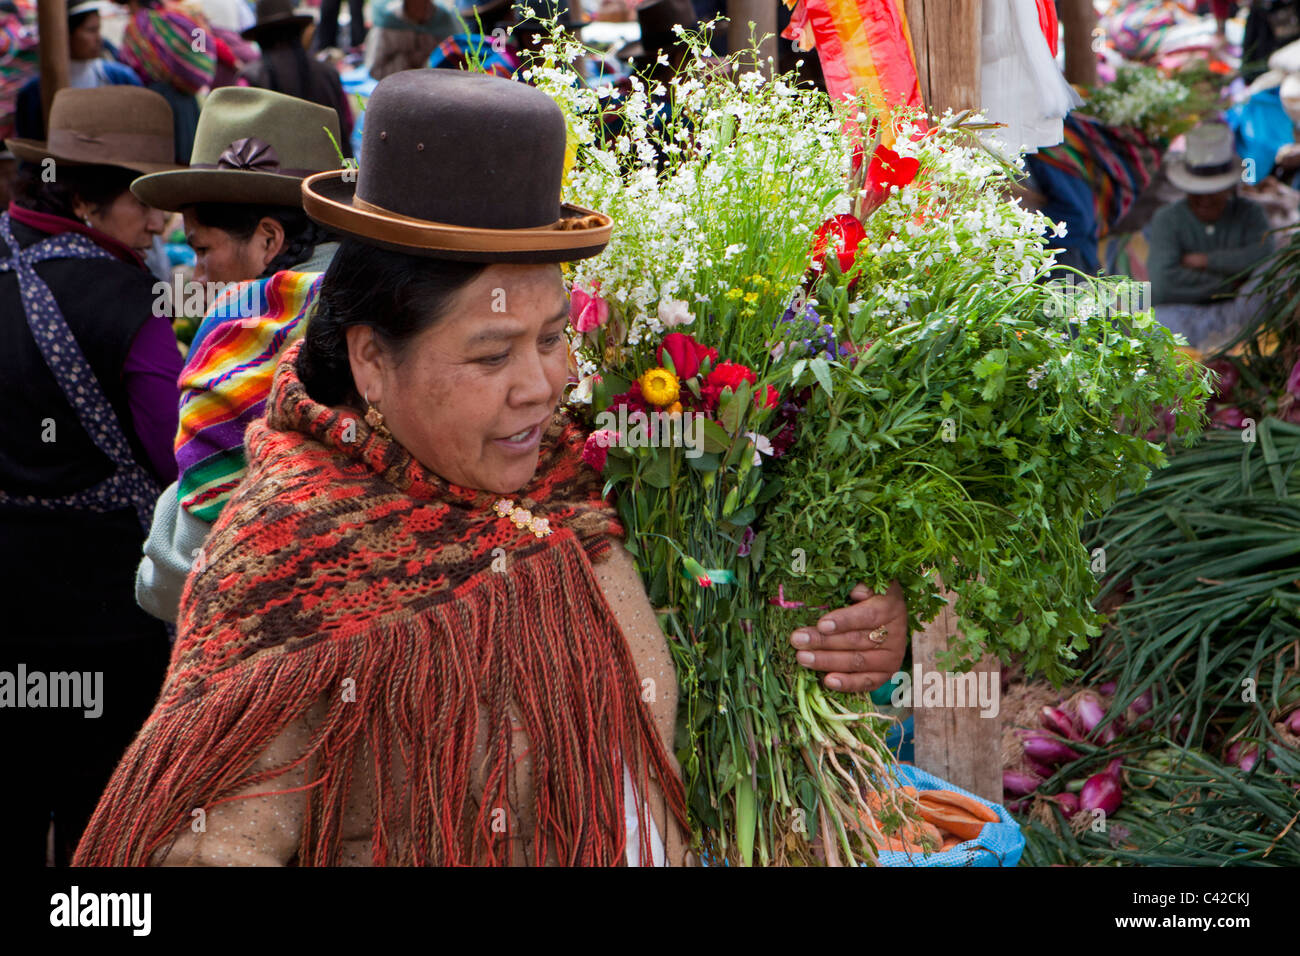 Peru, Chinchero, Woman on market buying flowers. Stock Photo